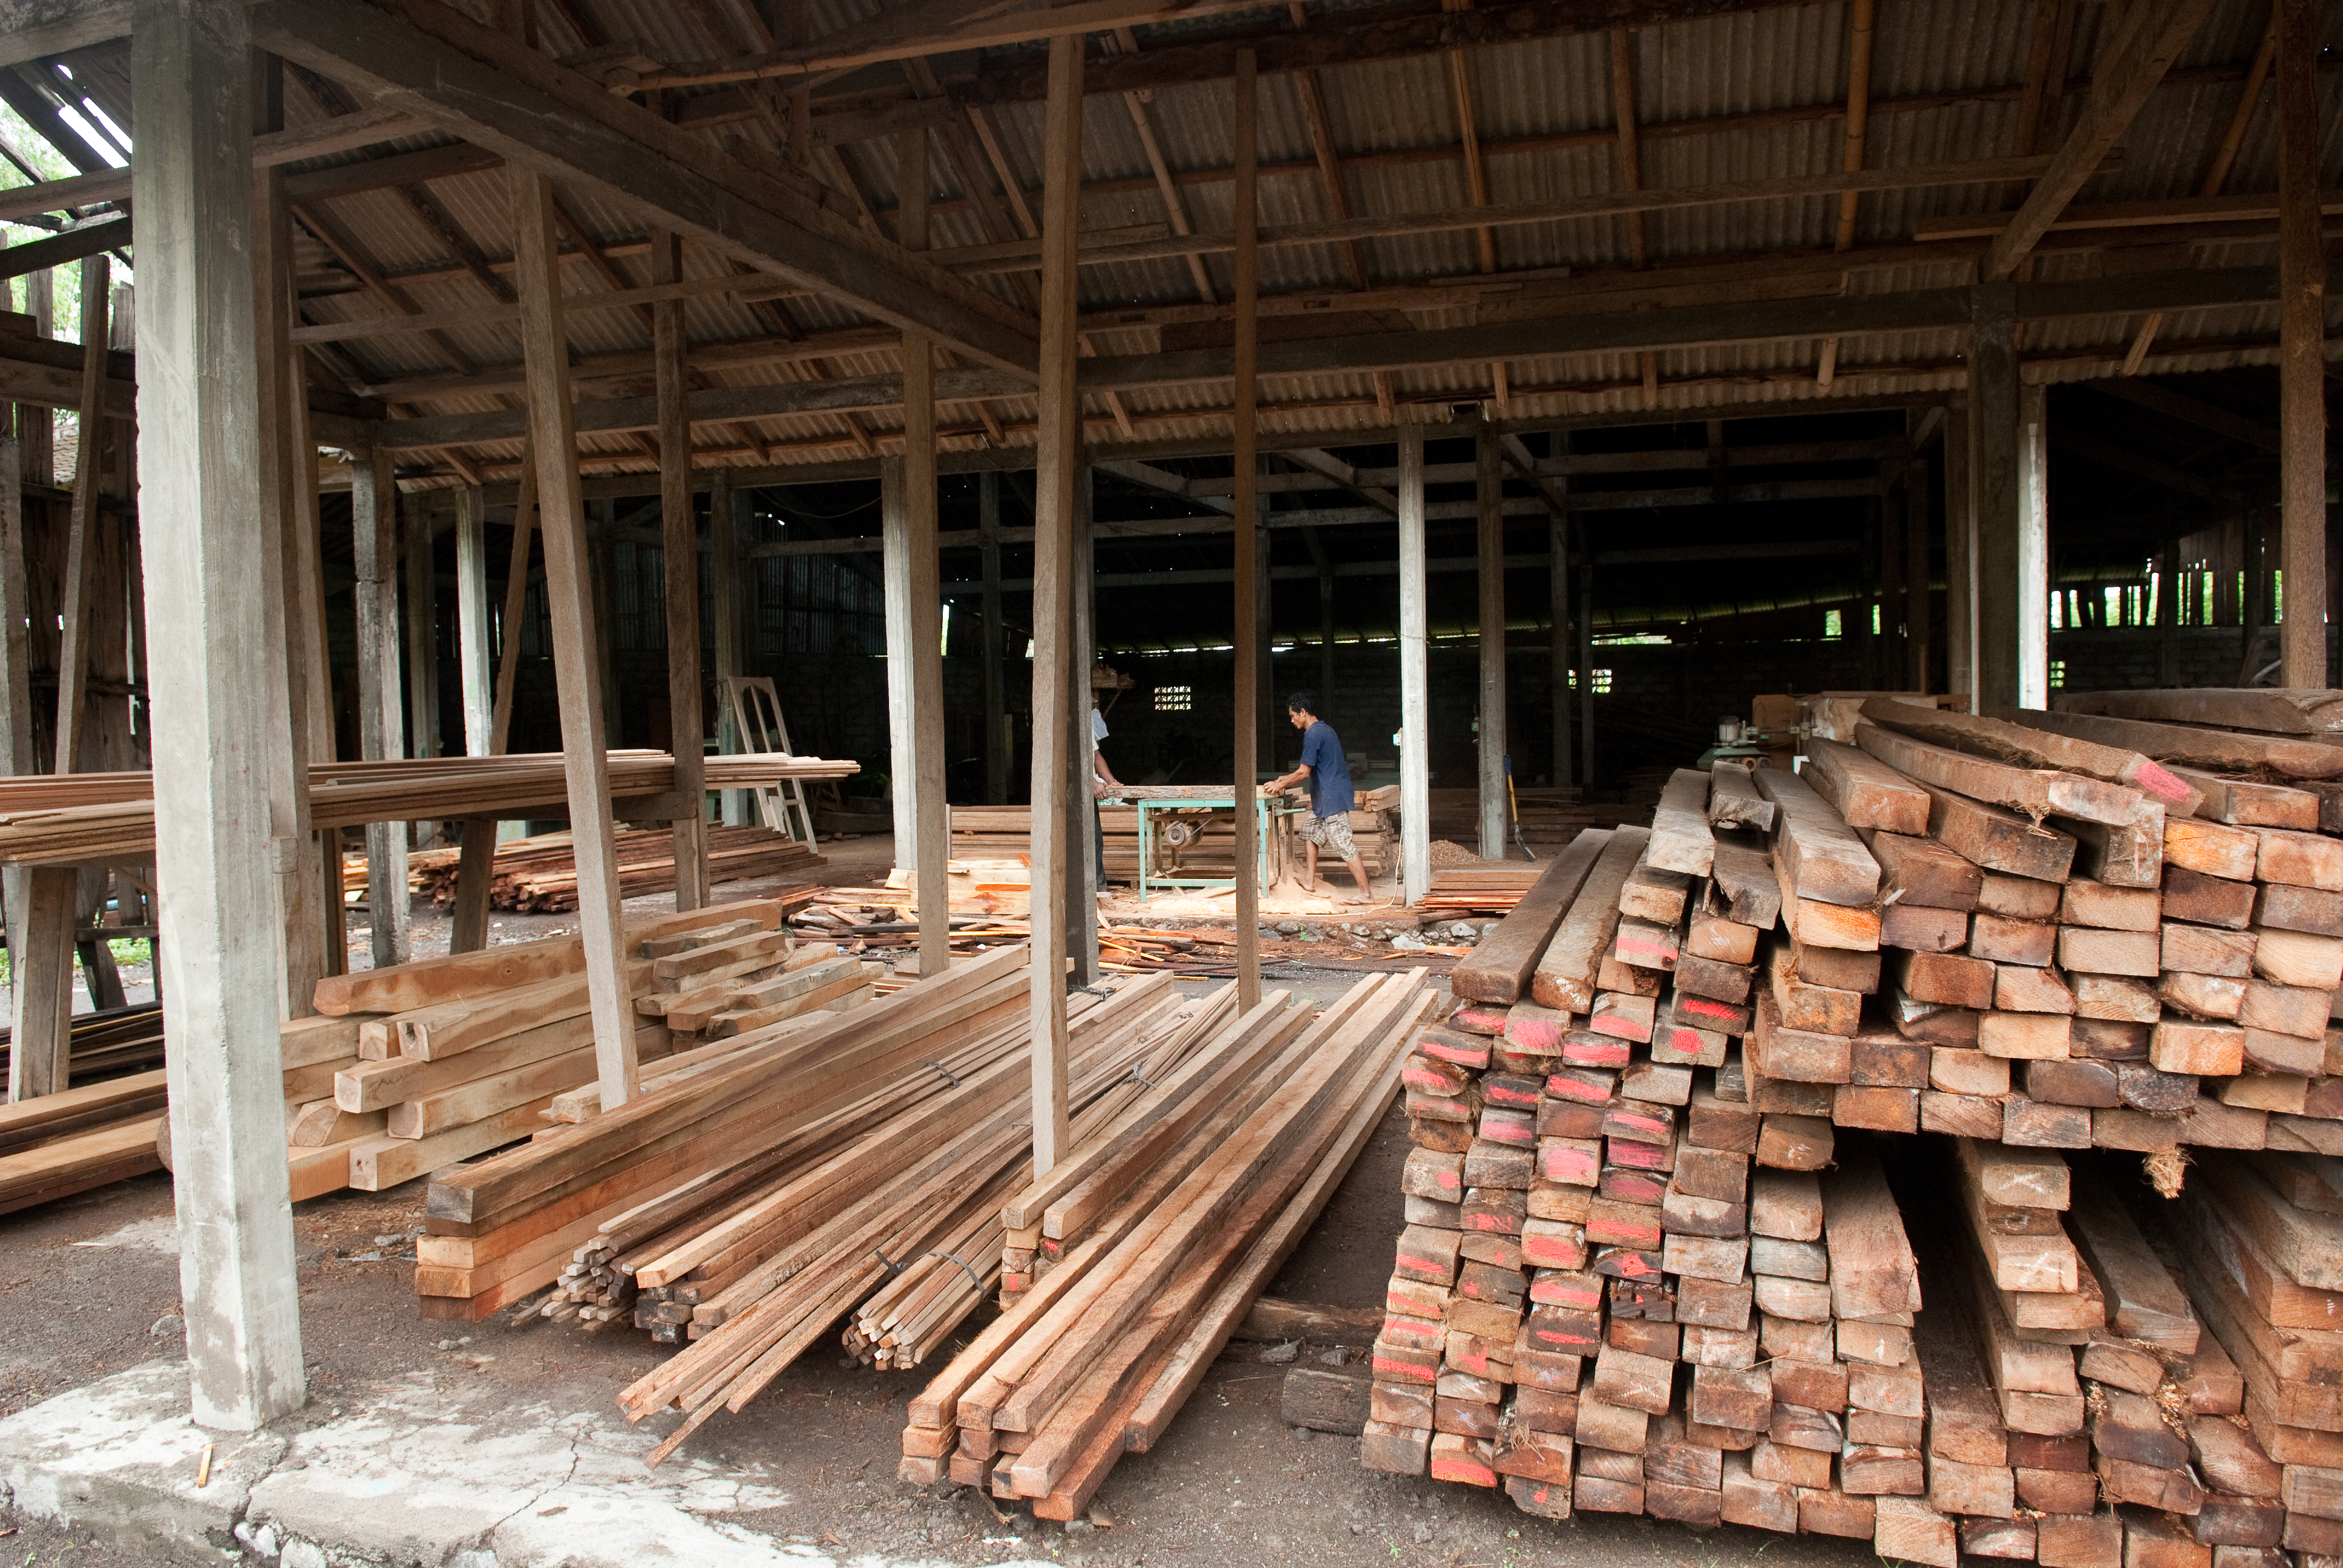 Photograph showing a lumberyard